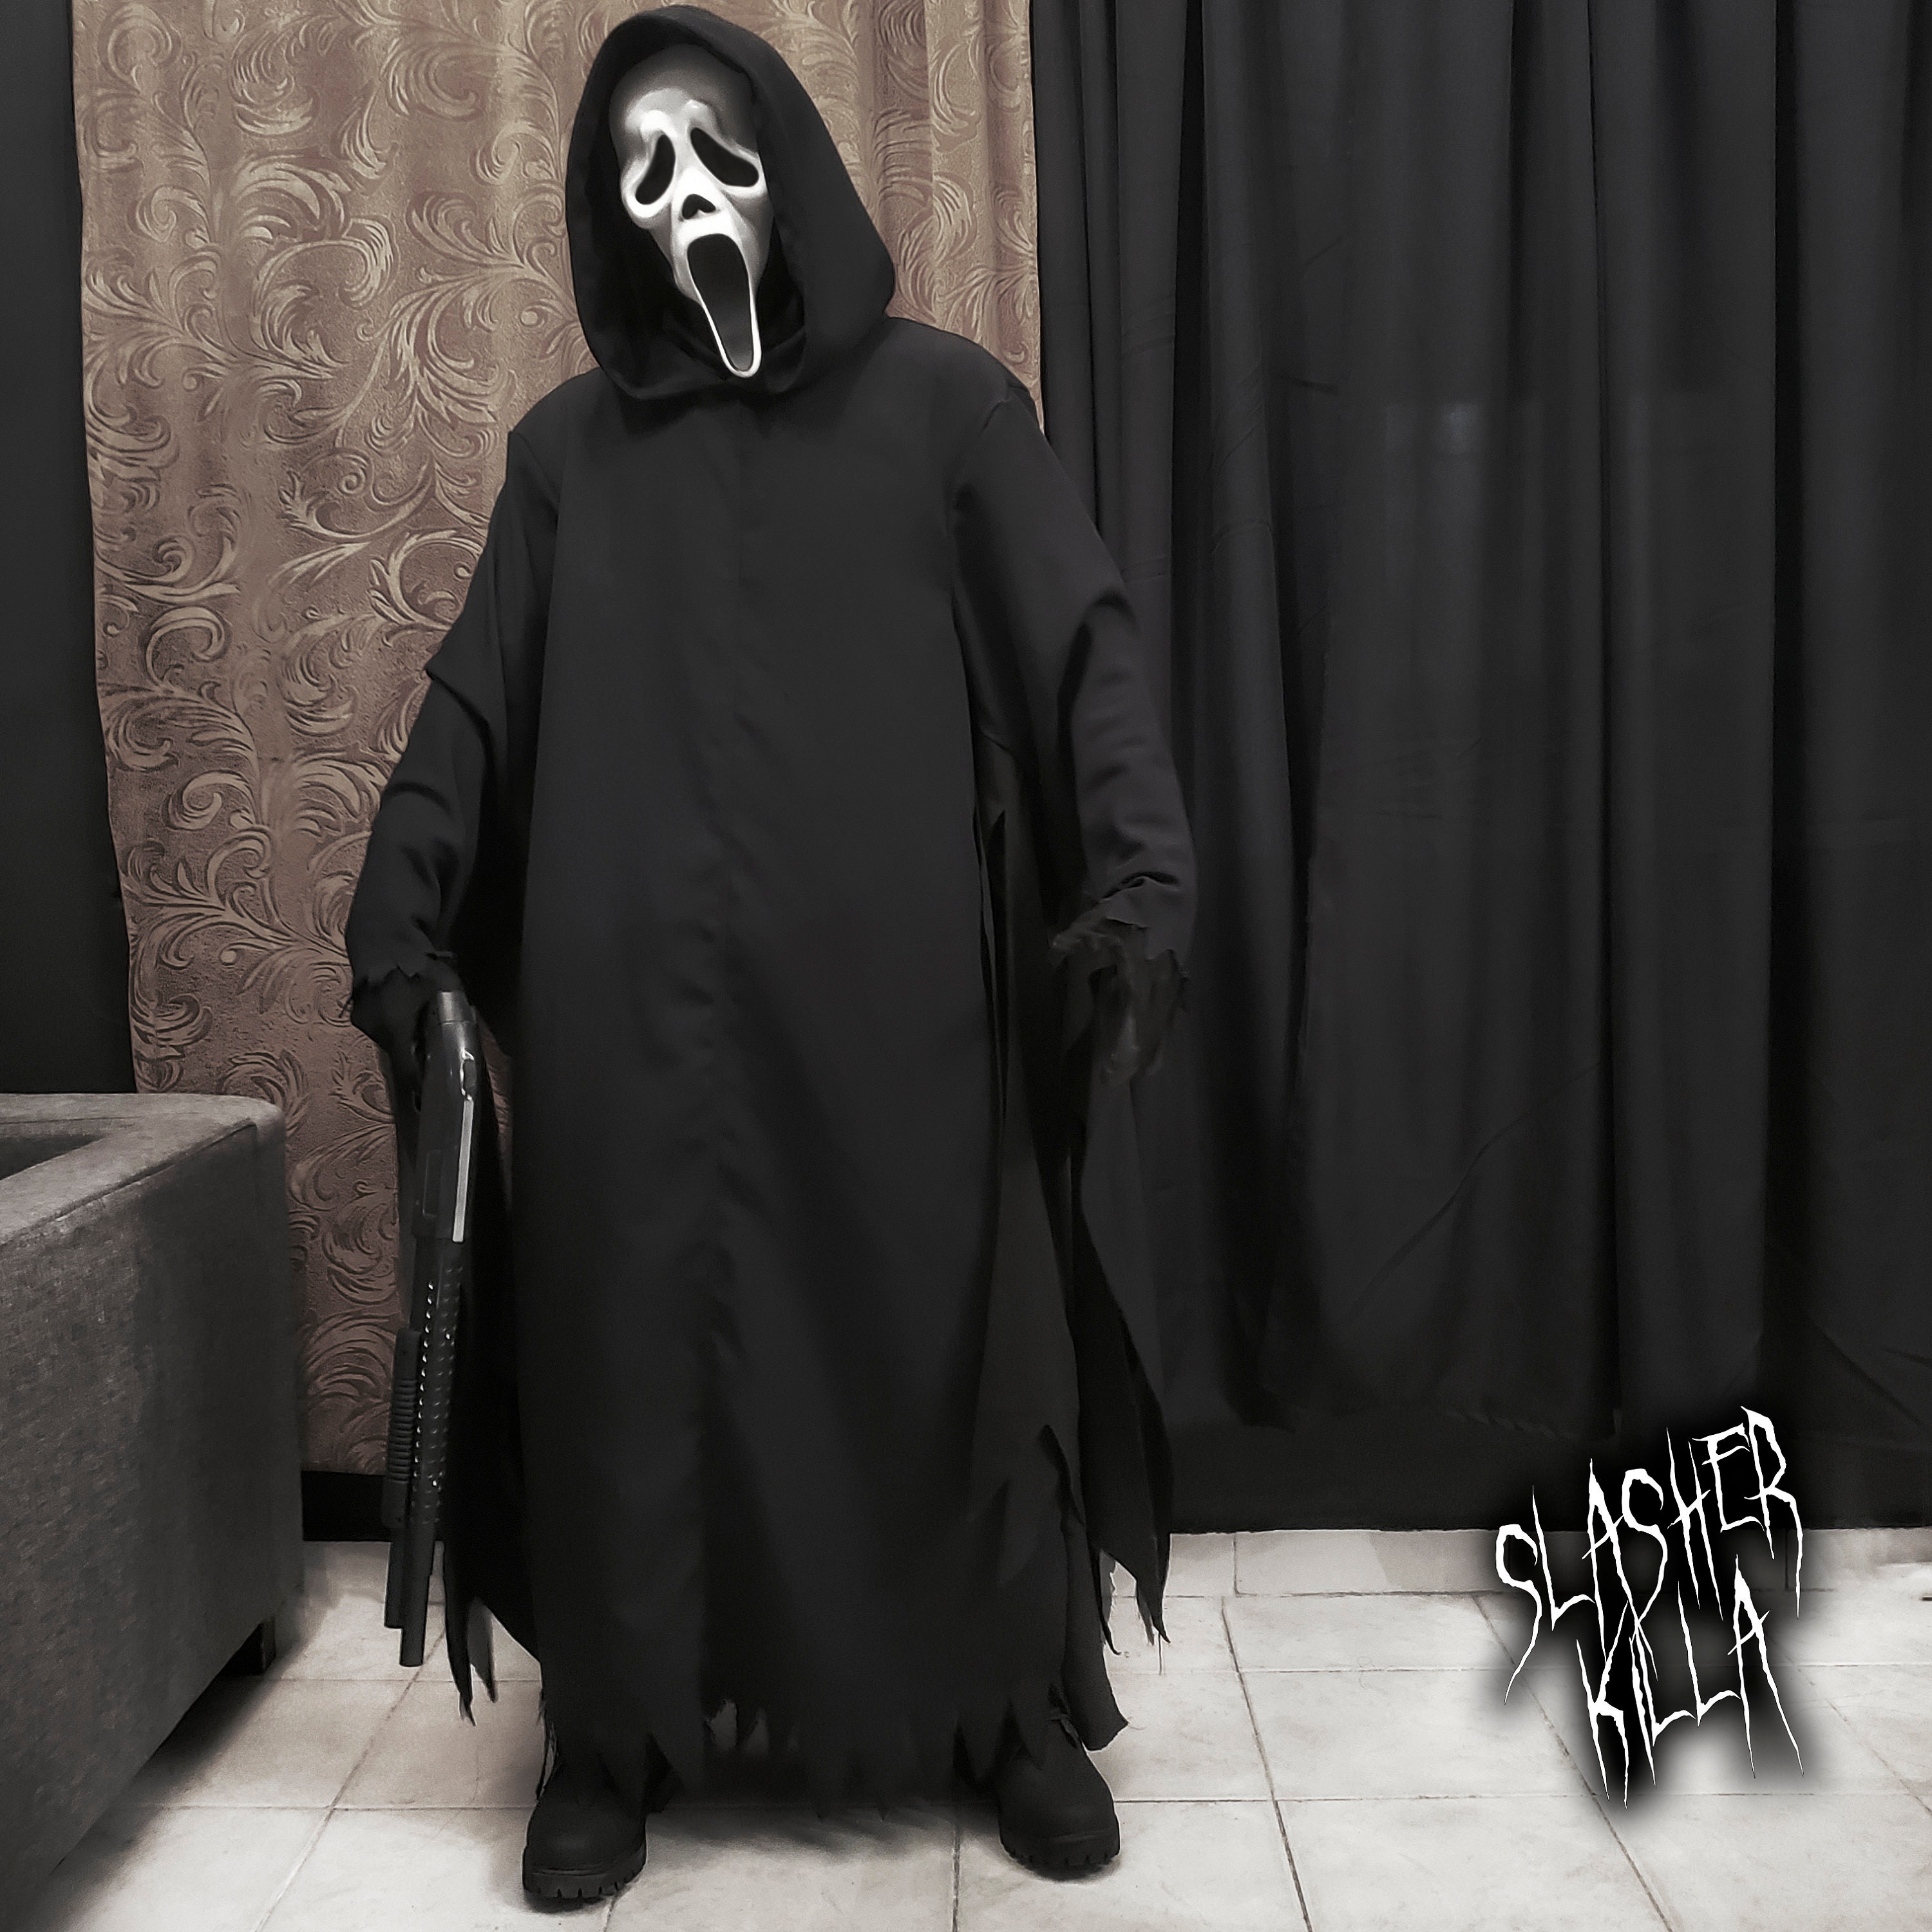 Scream Ghostface Costume - Etsy